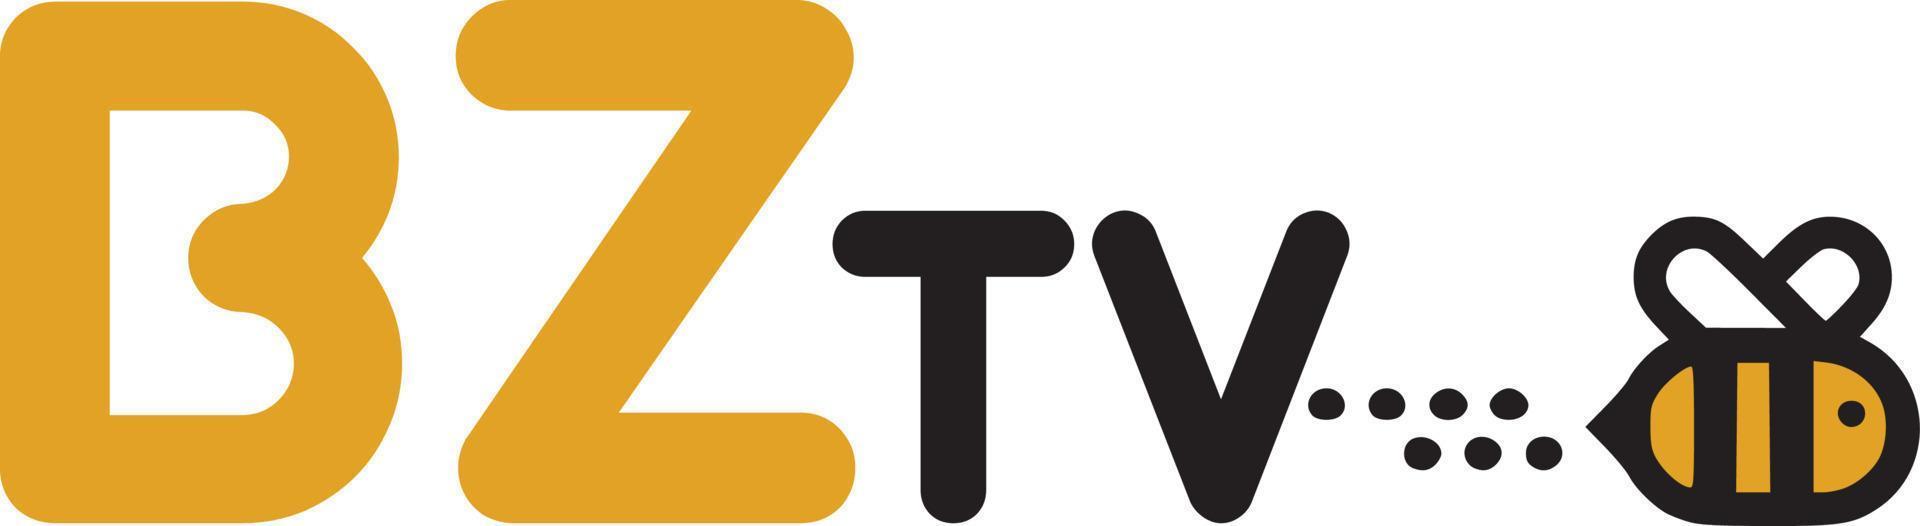 BZ Tv Logo For Kids Channel vector